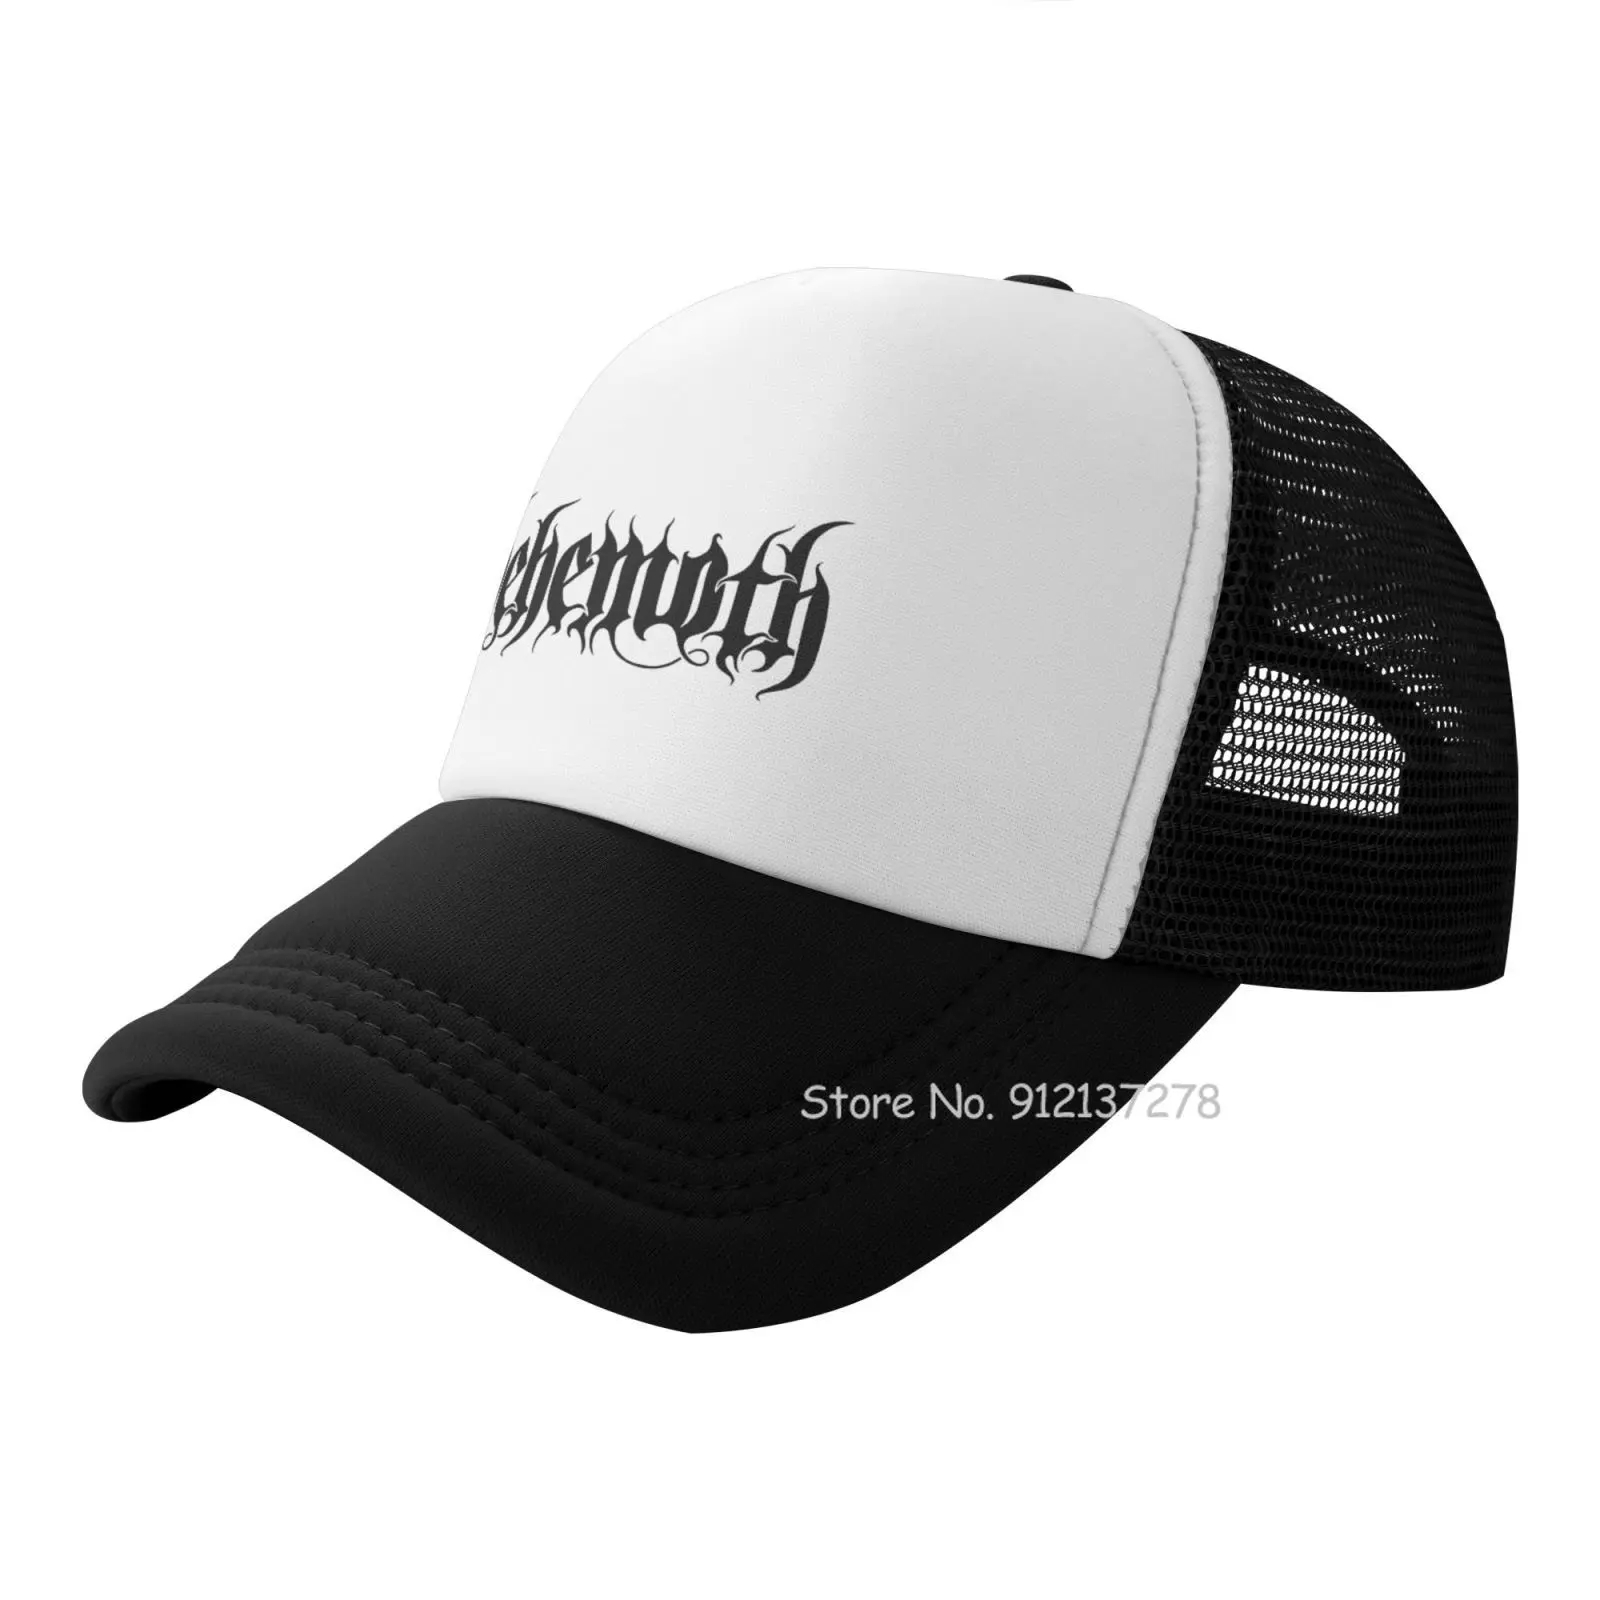 Behemoth Men Women Mesh Hat Death Rock Printed Baseball Caps Summer Hip Hop Fashion Casual Cool Mesh Trucker Cap Hats behemoth